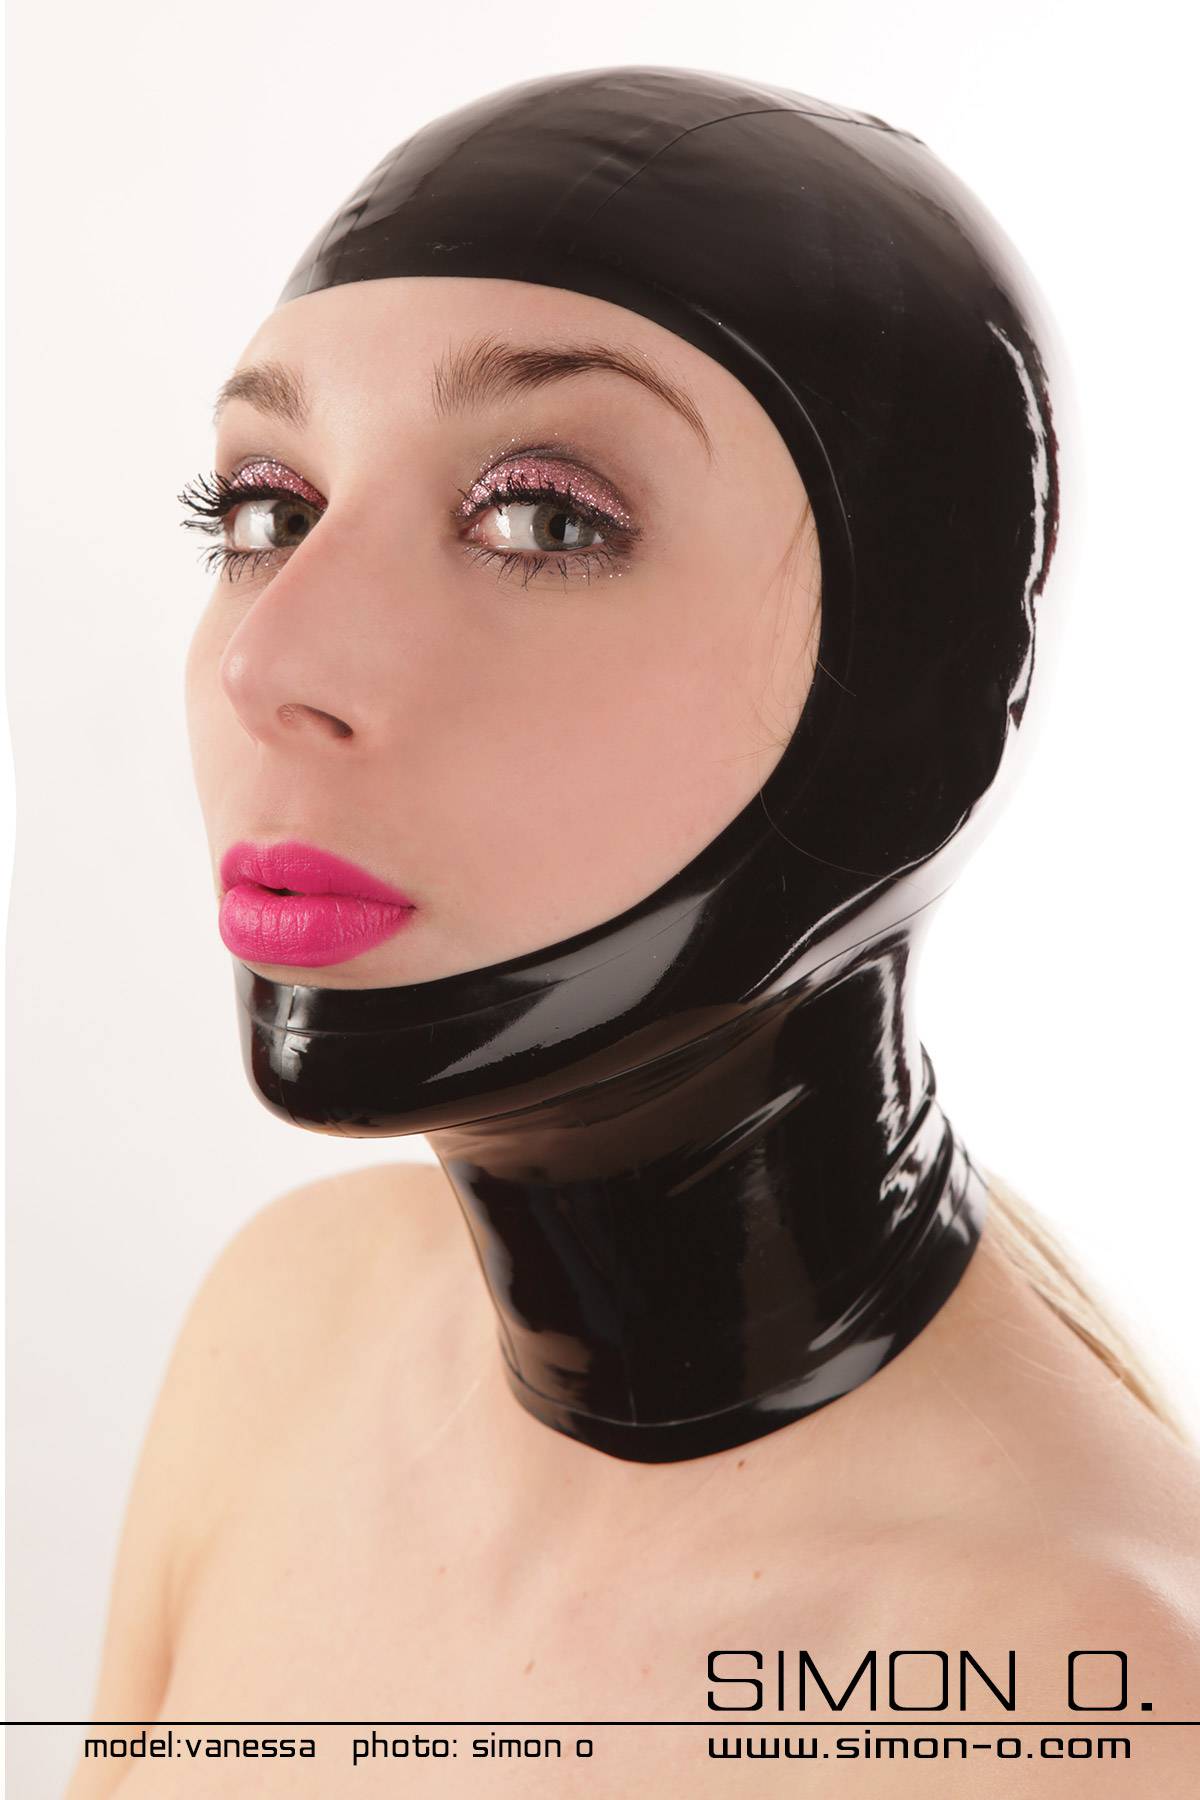 A woman wears a black face open latex mask